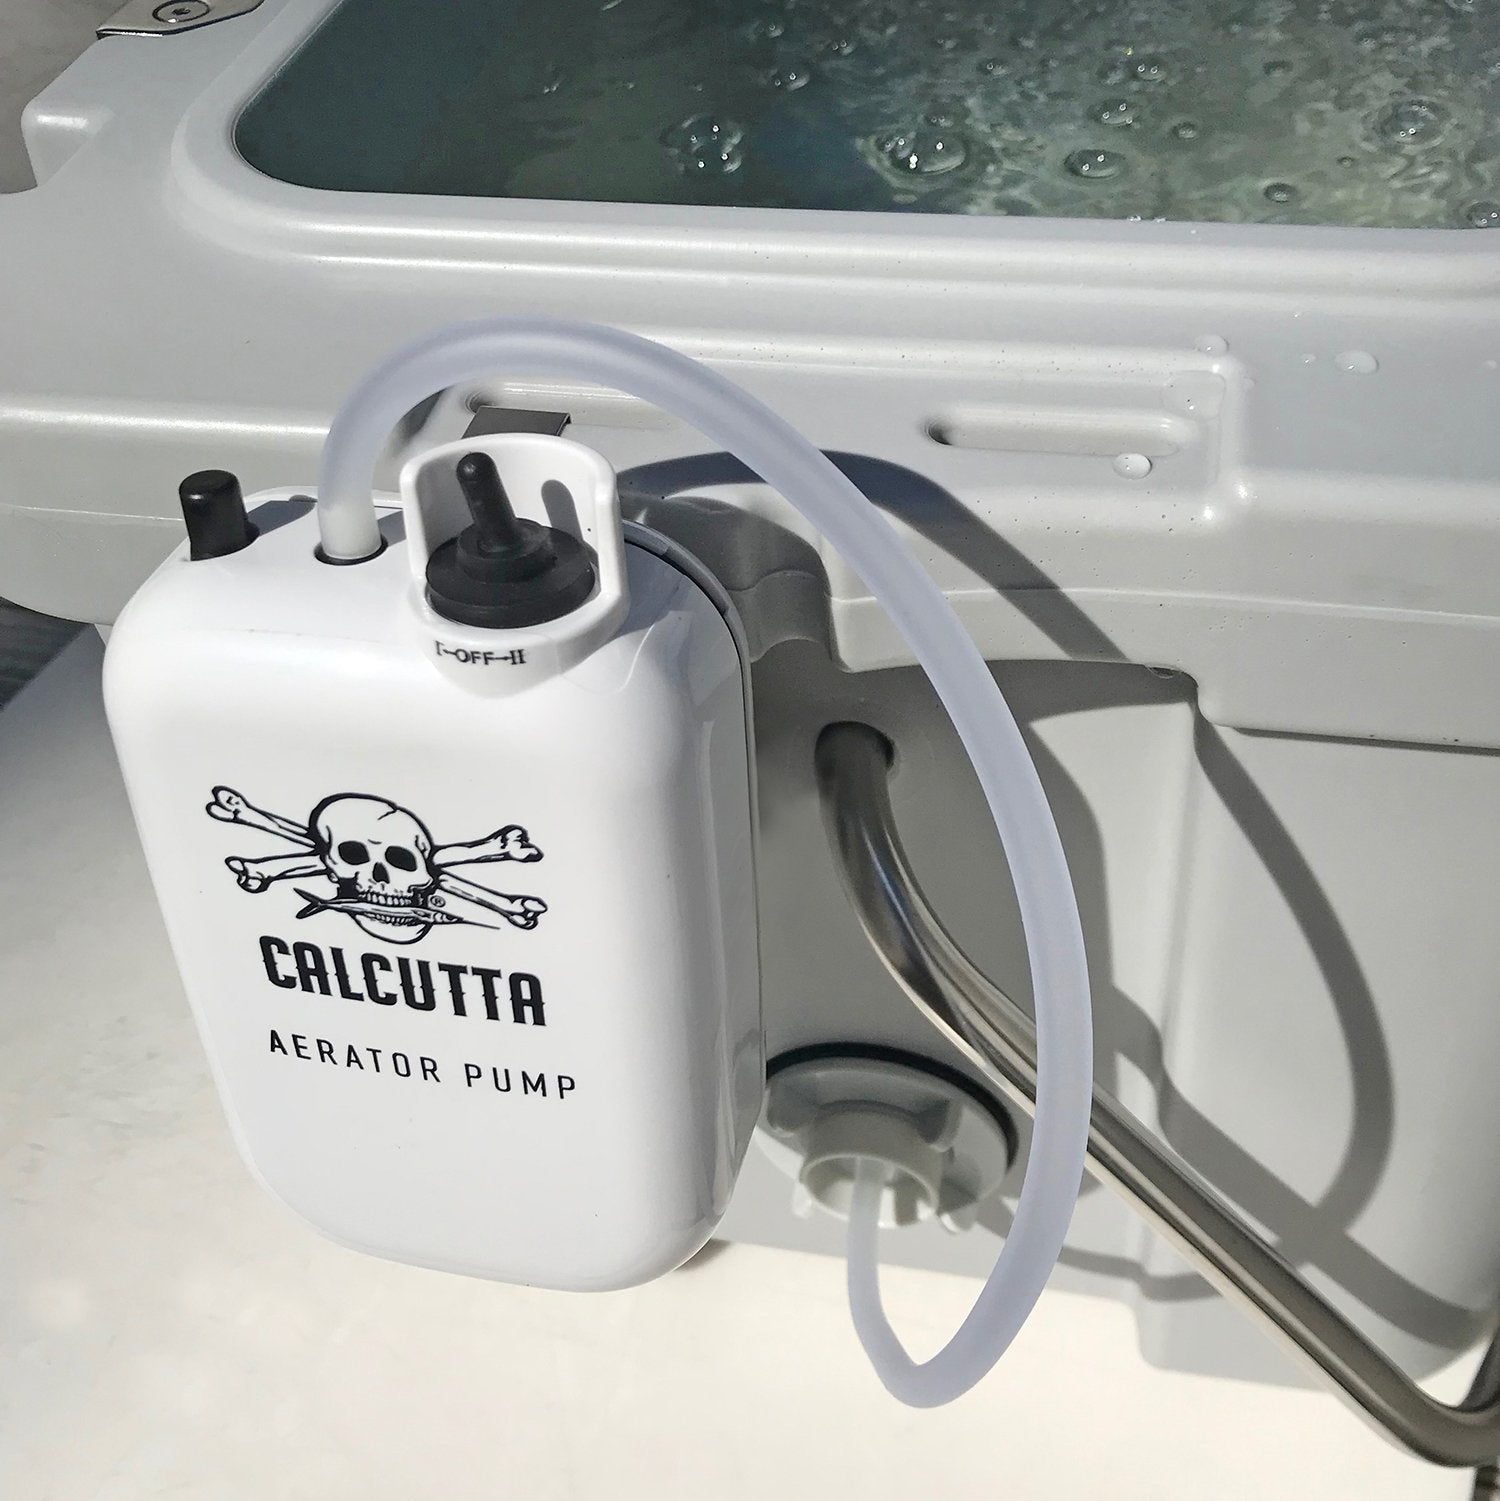 Calcutta aerator cooler pump kit on cooler